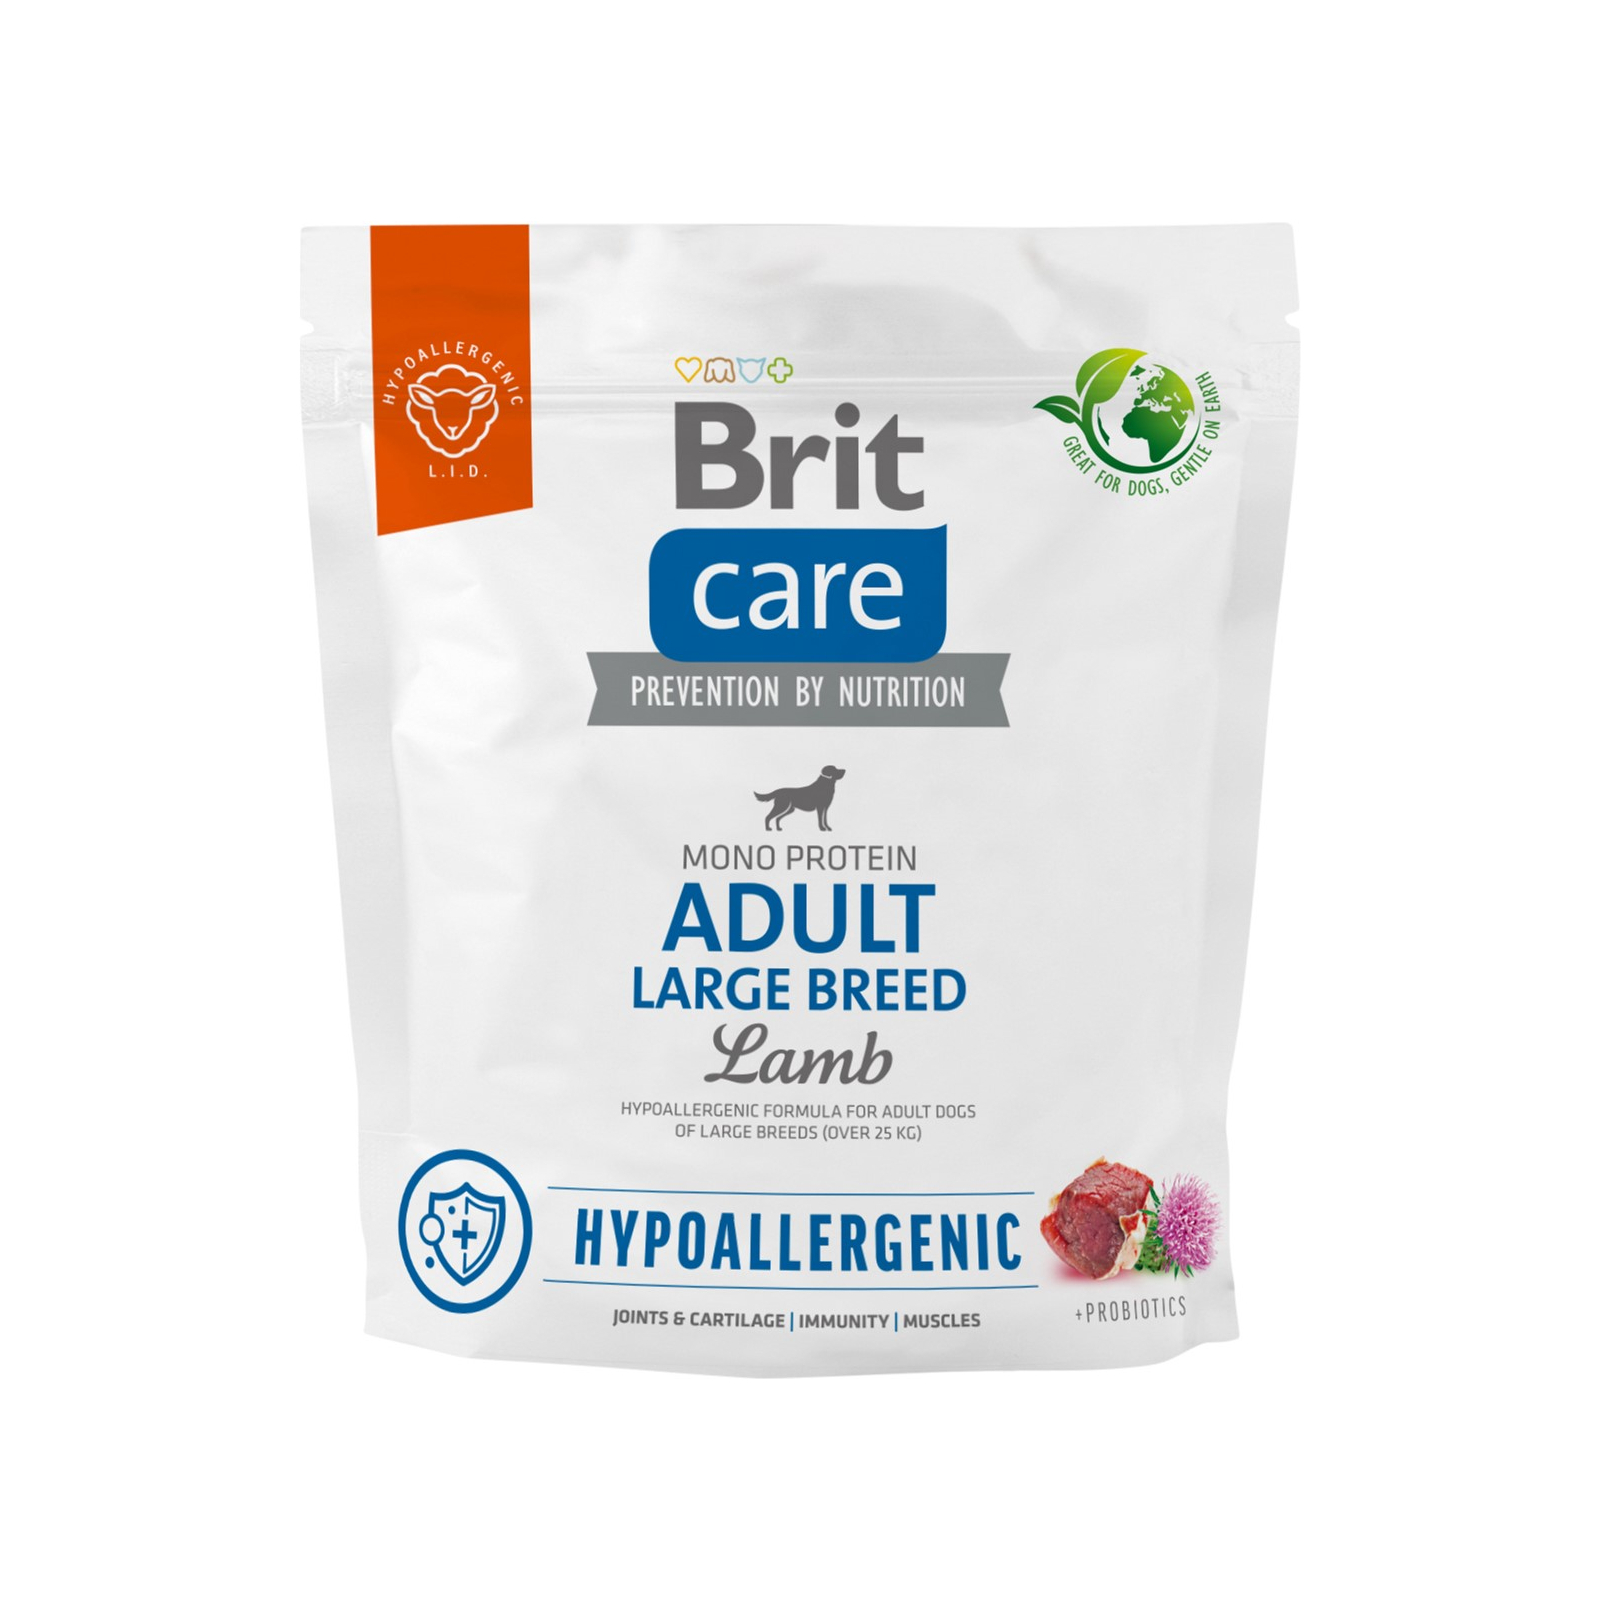 Сухий корм для собак Brit Care Dog Hypoallergenic Adult Large Breed з ягням 1 кг (8595602559091)